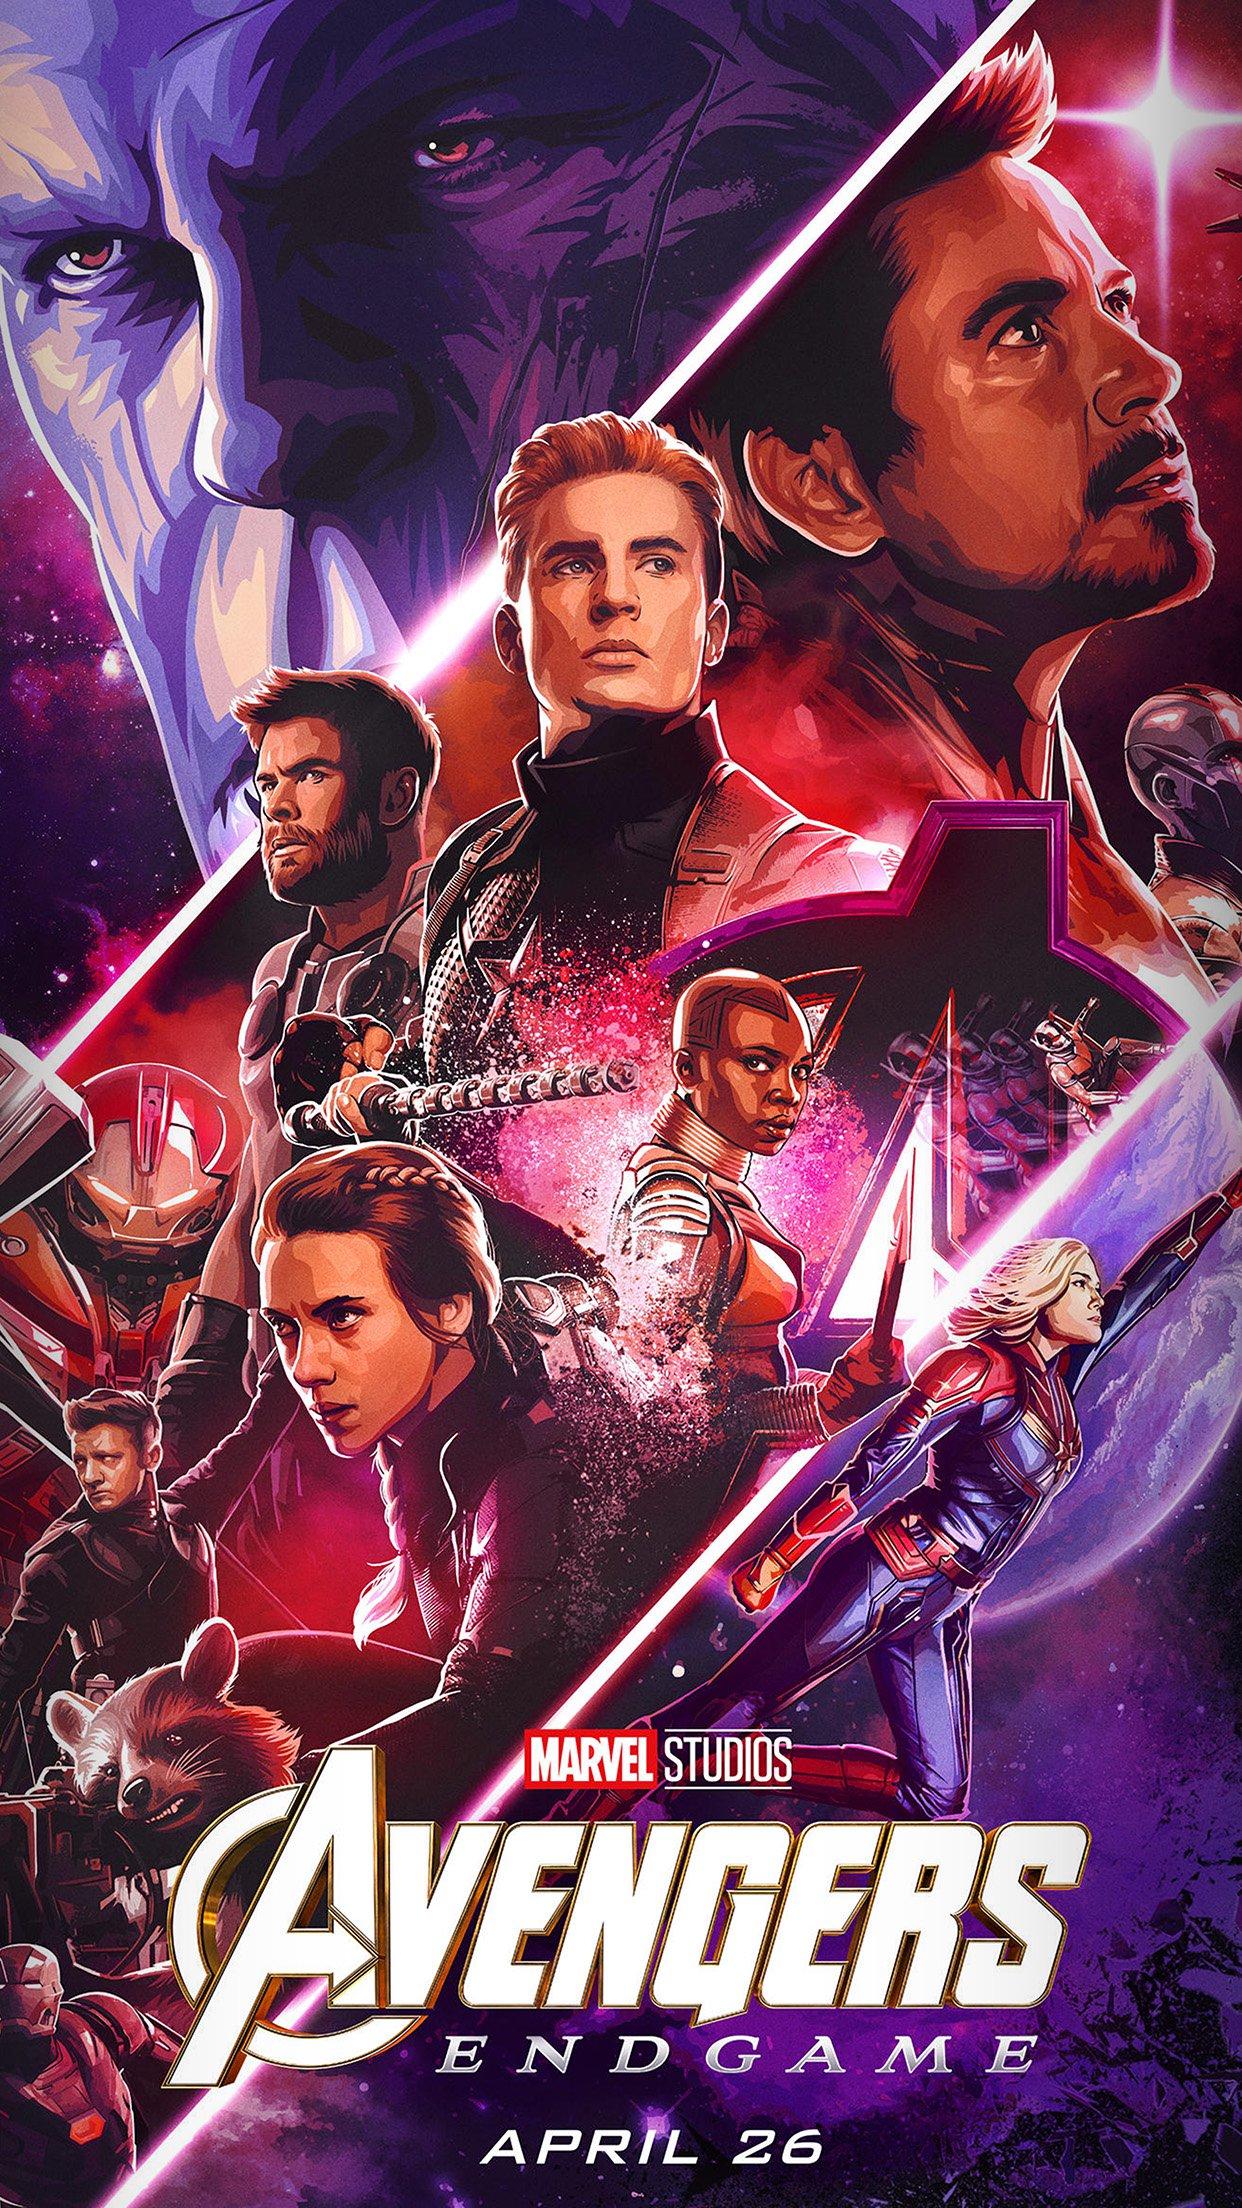 iPhone wallpaper. avengers poster